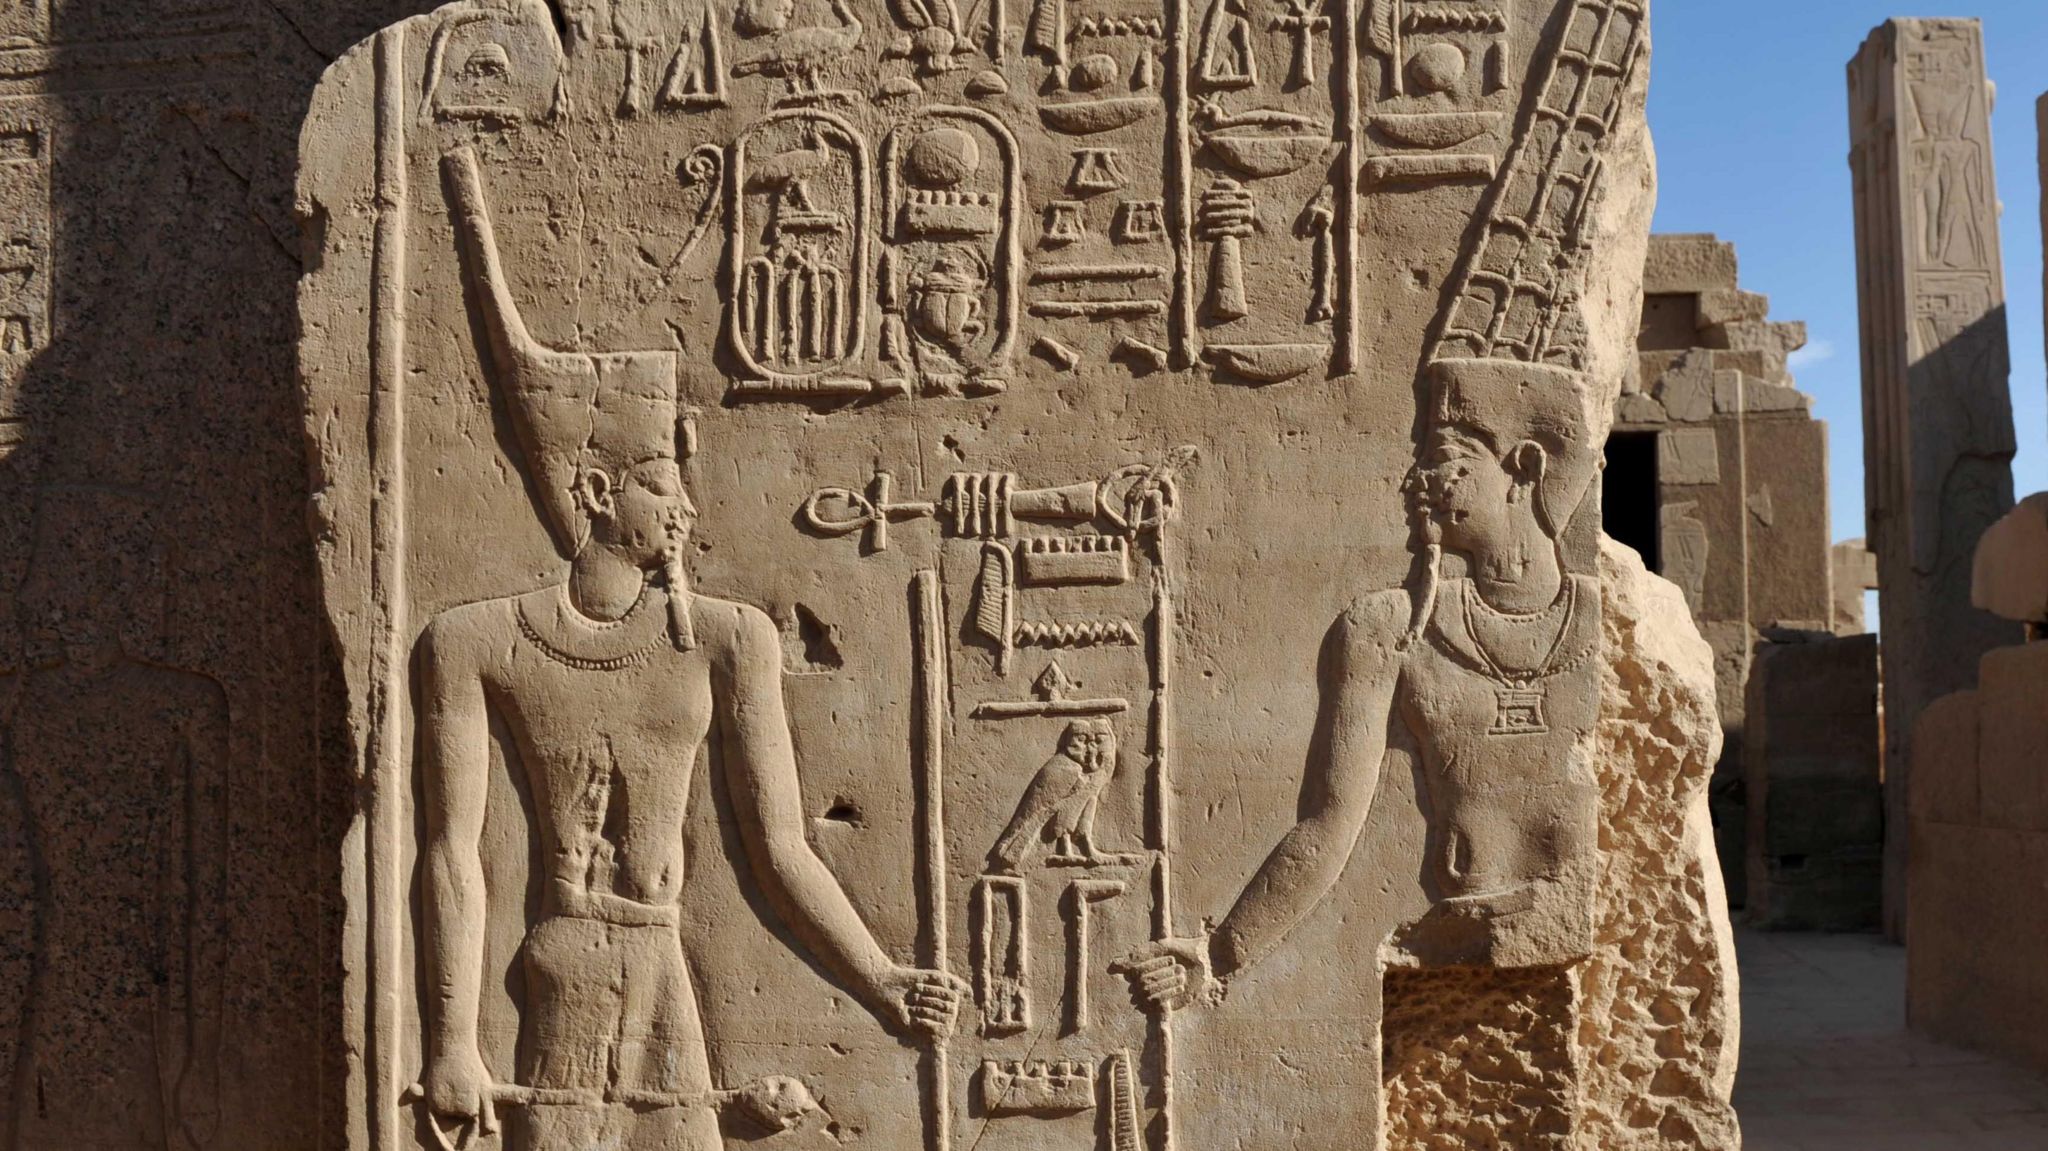 Hieroglyphs at the Temple of Karnak, near Luxor